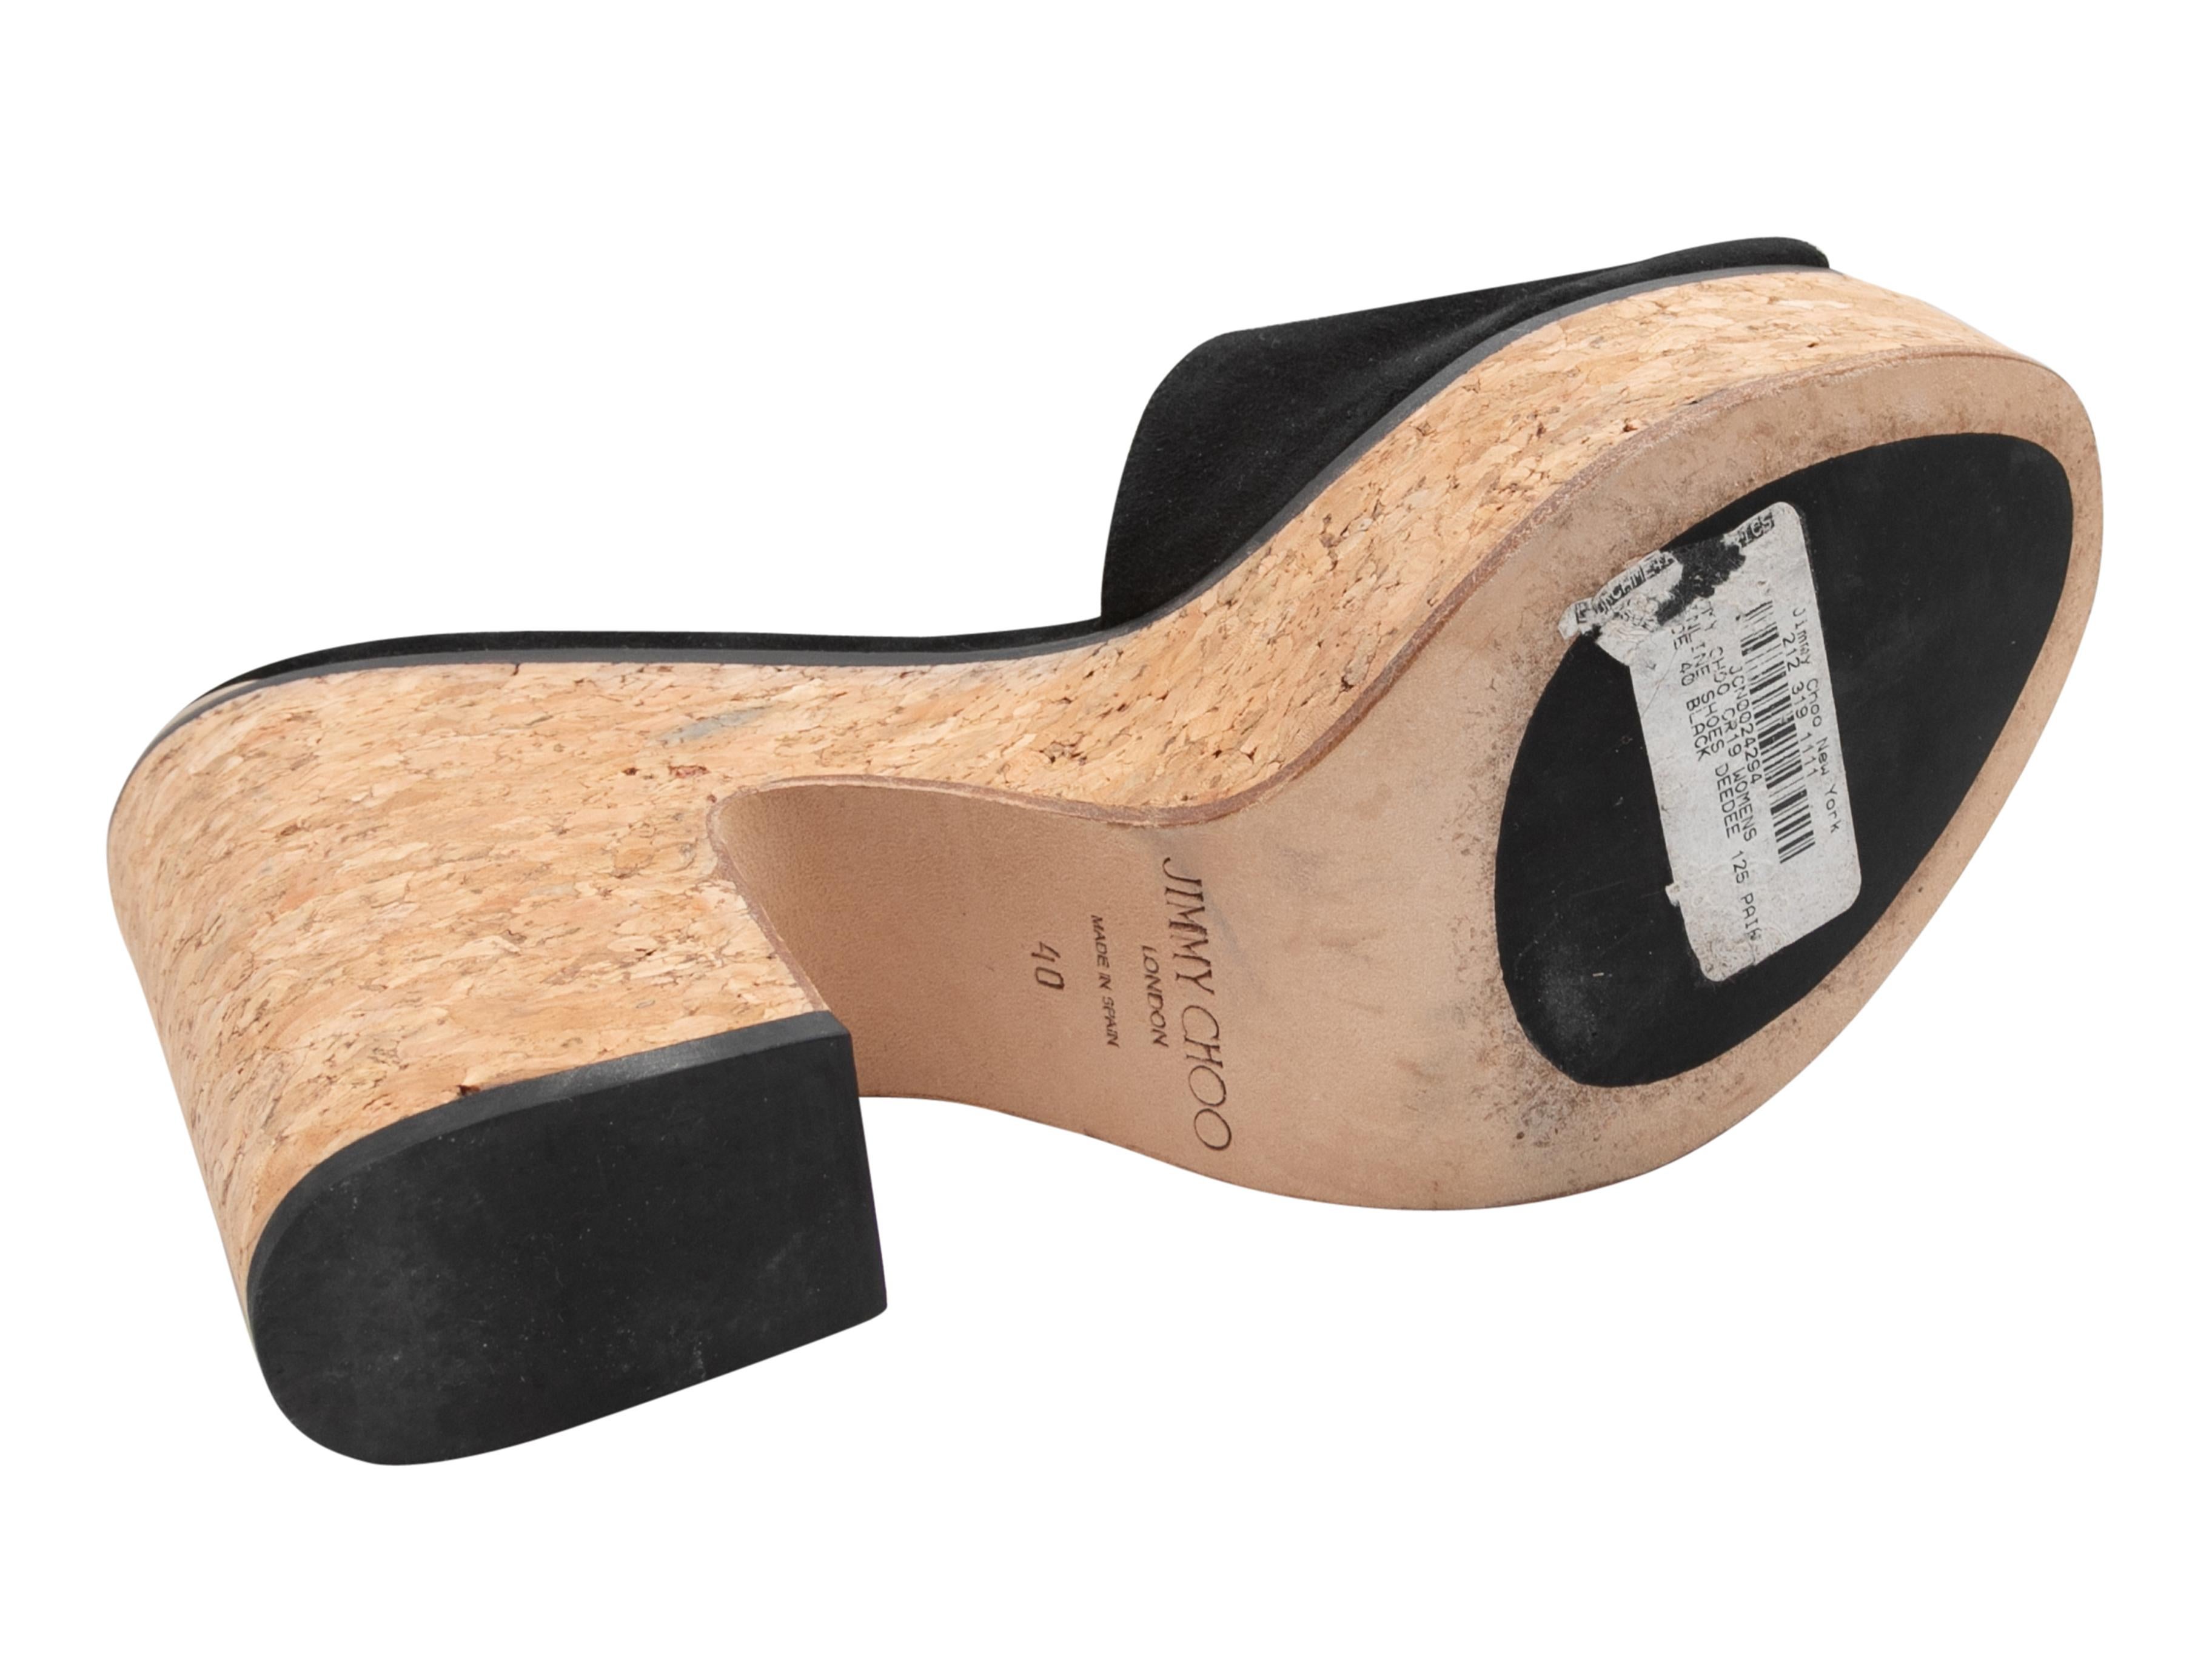 Black suede platform slide sandals by Jimmy Choo. Cork soles. 1.5